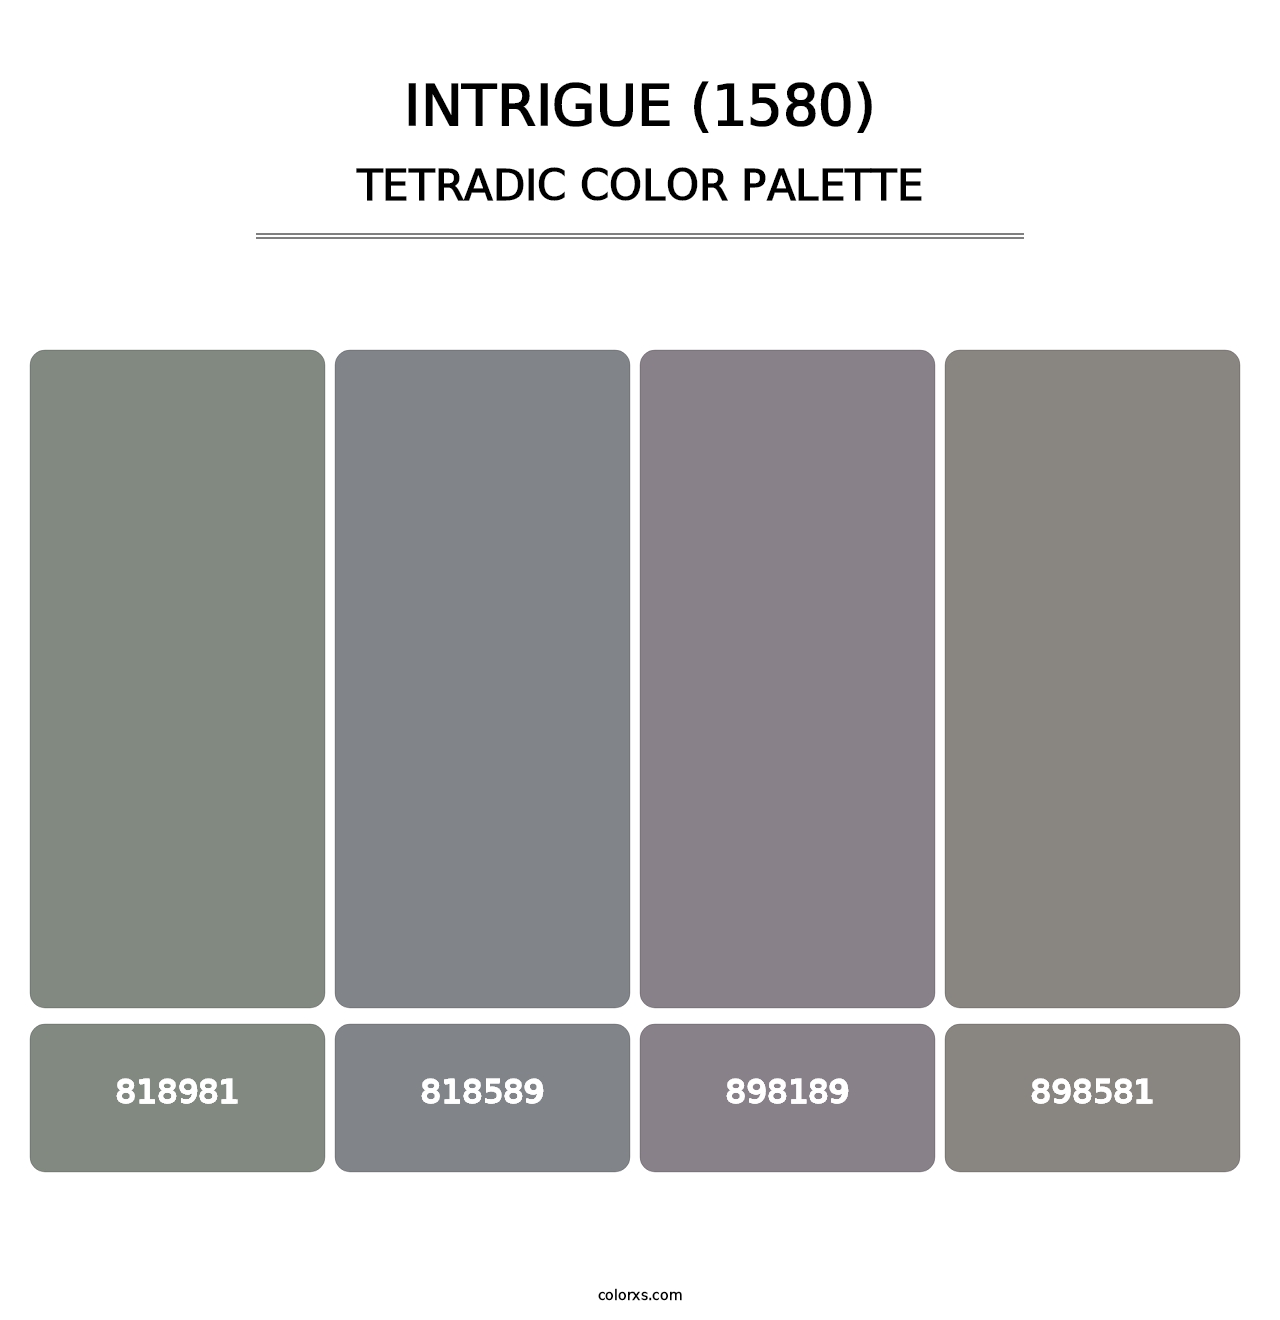 Intrigue (1580) - Tetradic Color Palette